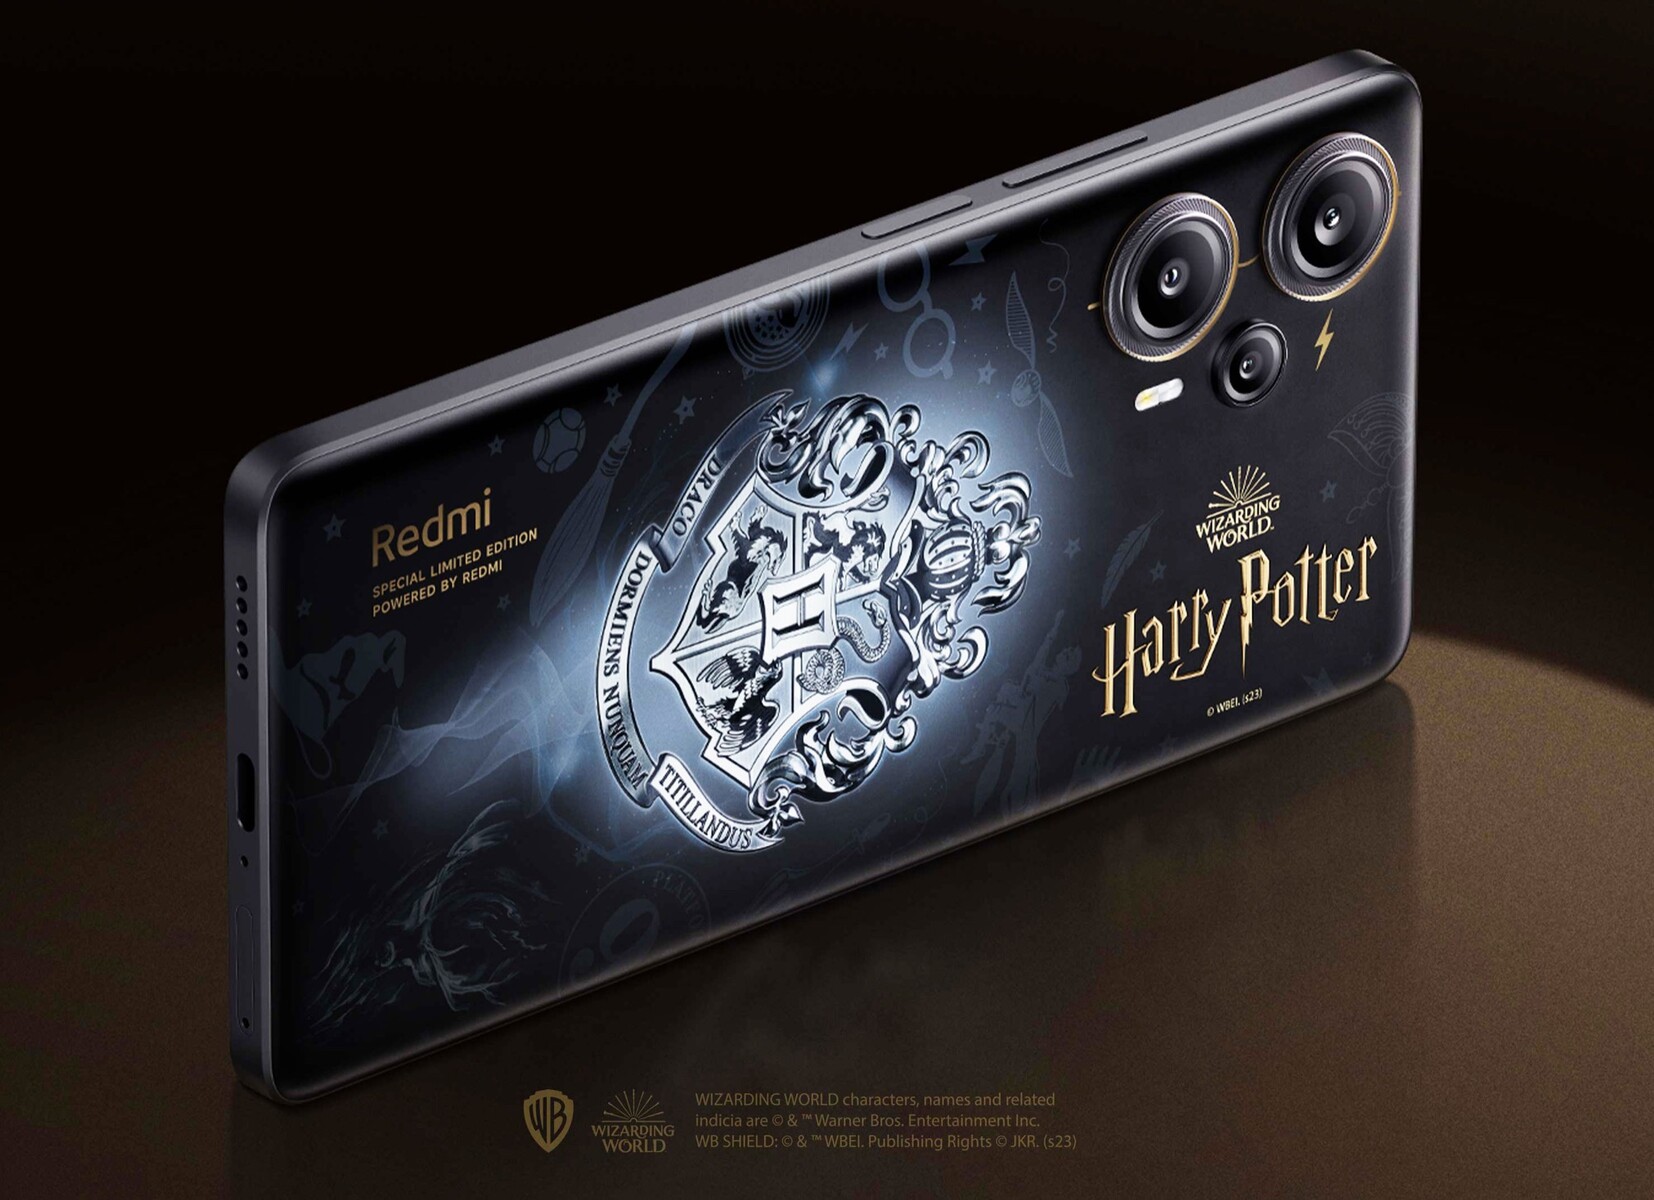 Redmi Note 12 Turbo Harry Potter Edition